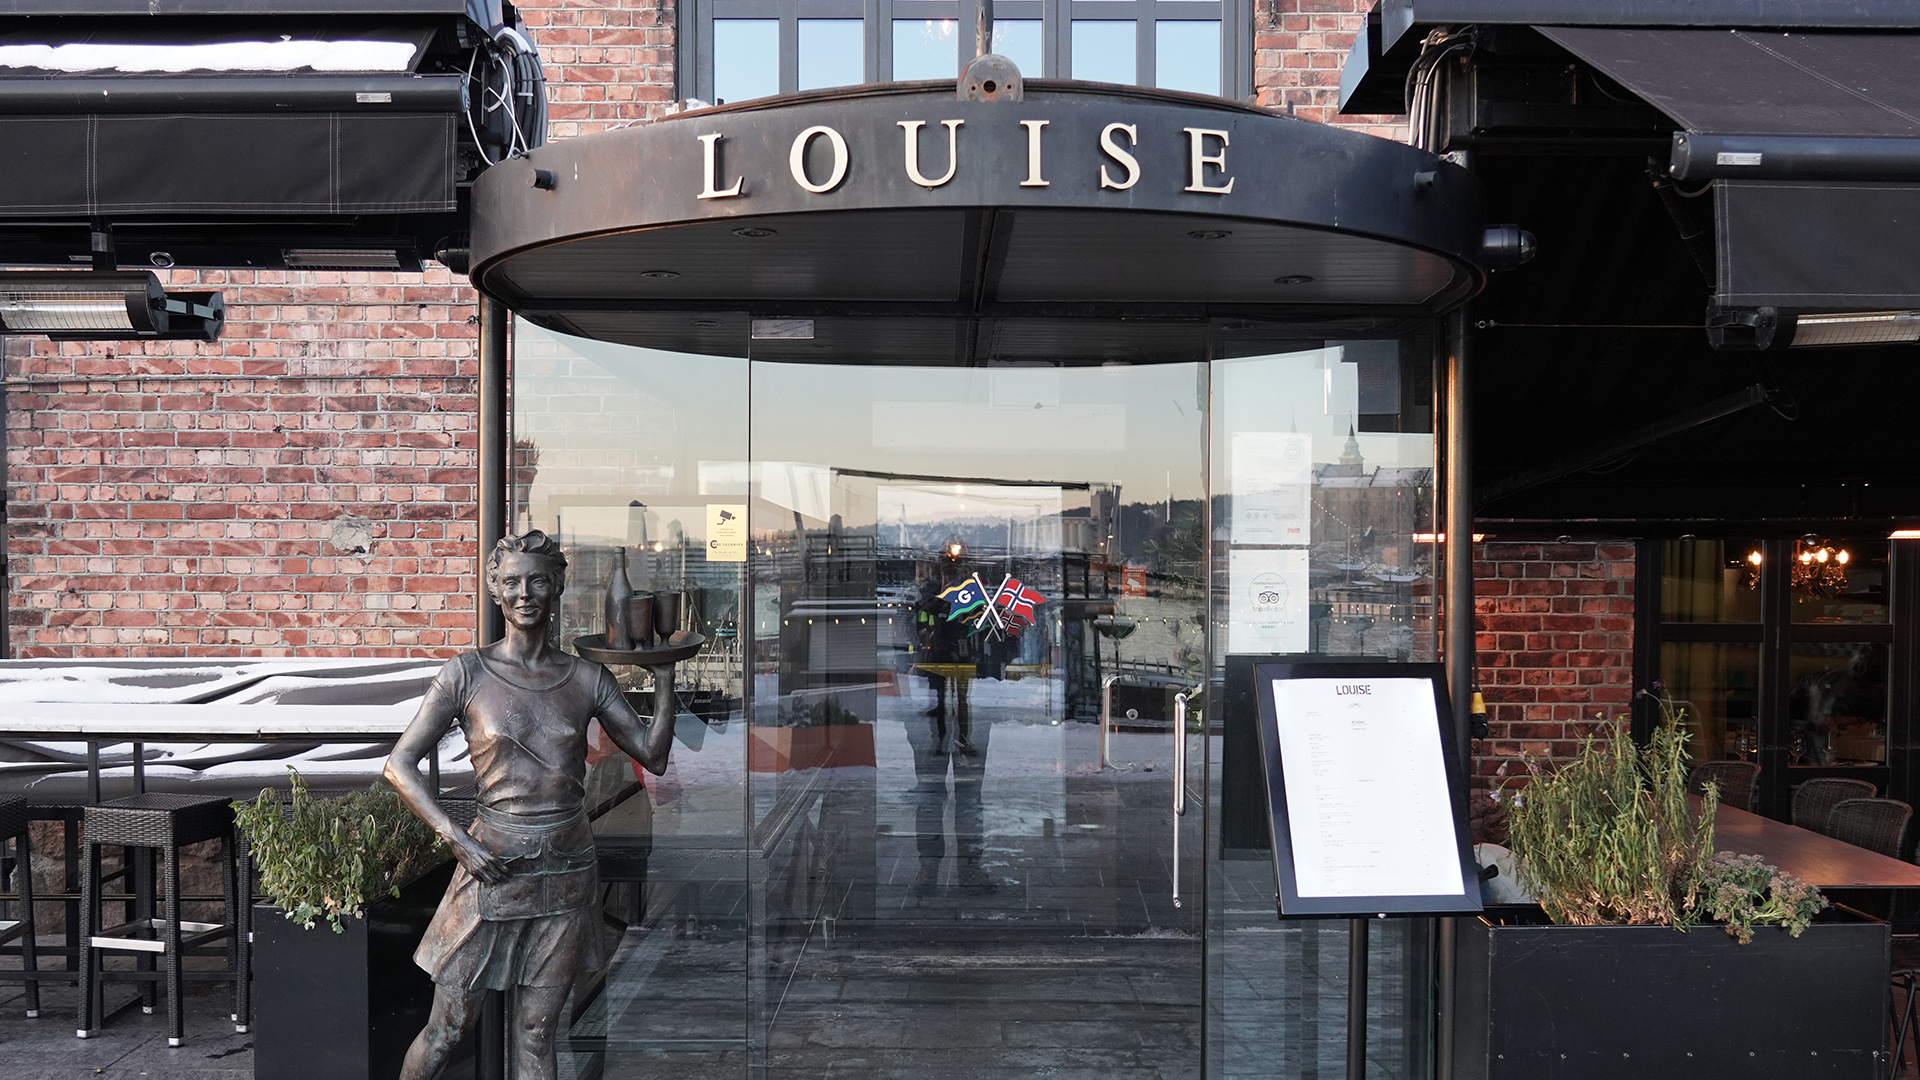 Das "Louise" Restaurant in Oslo, Norwegen. | dpa